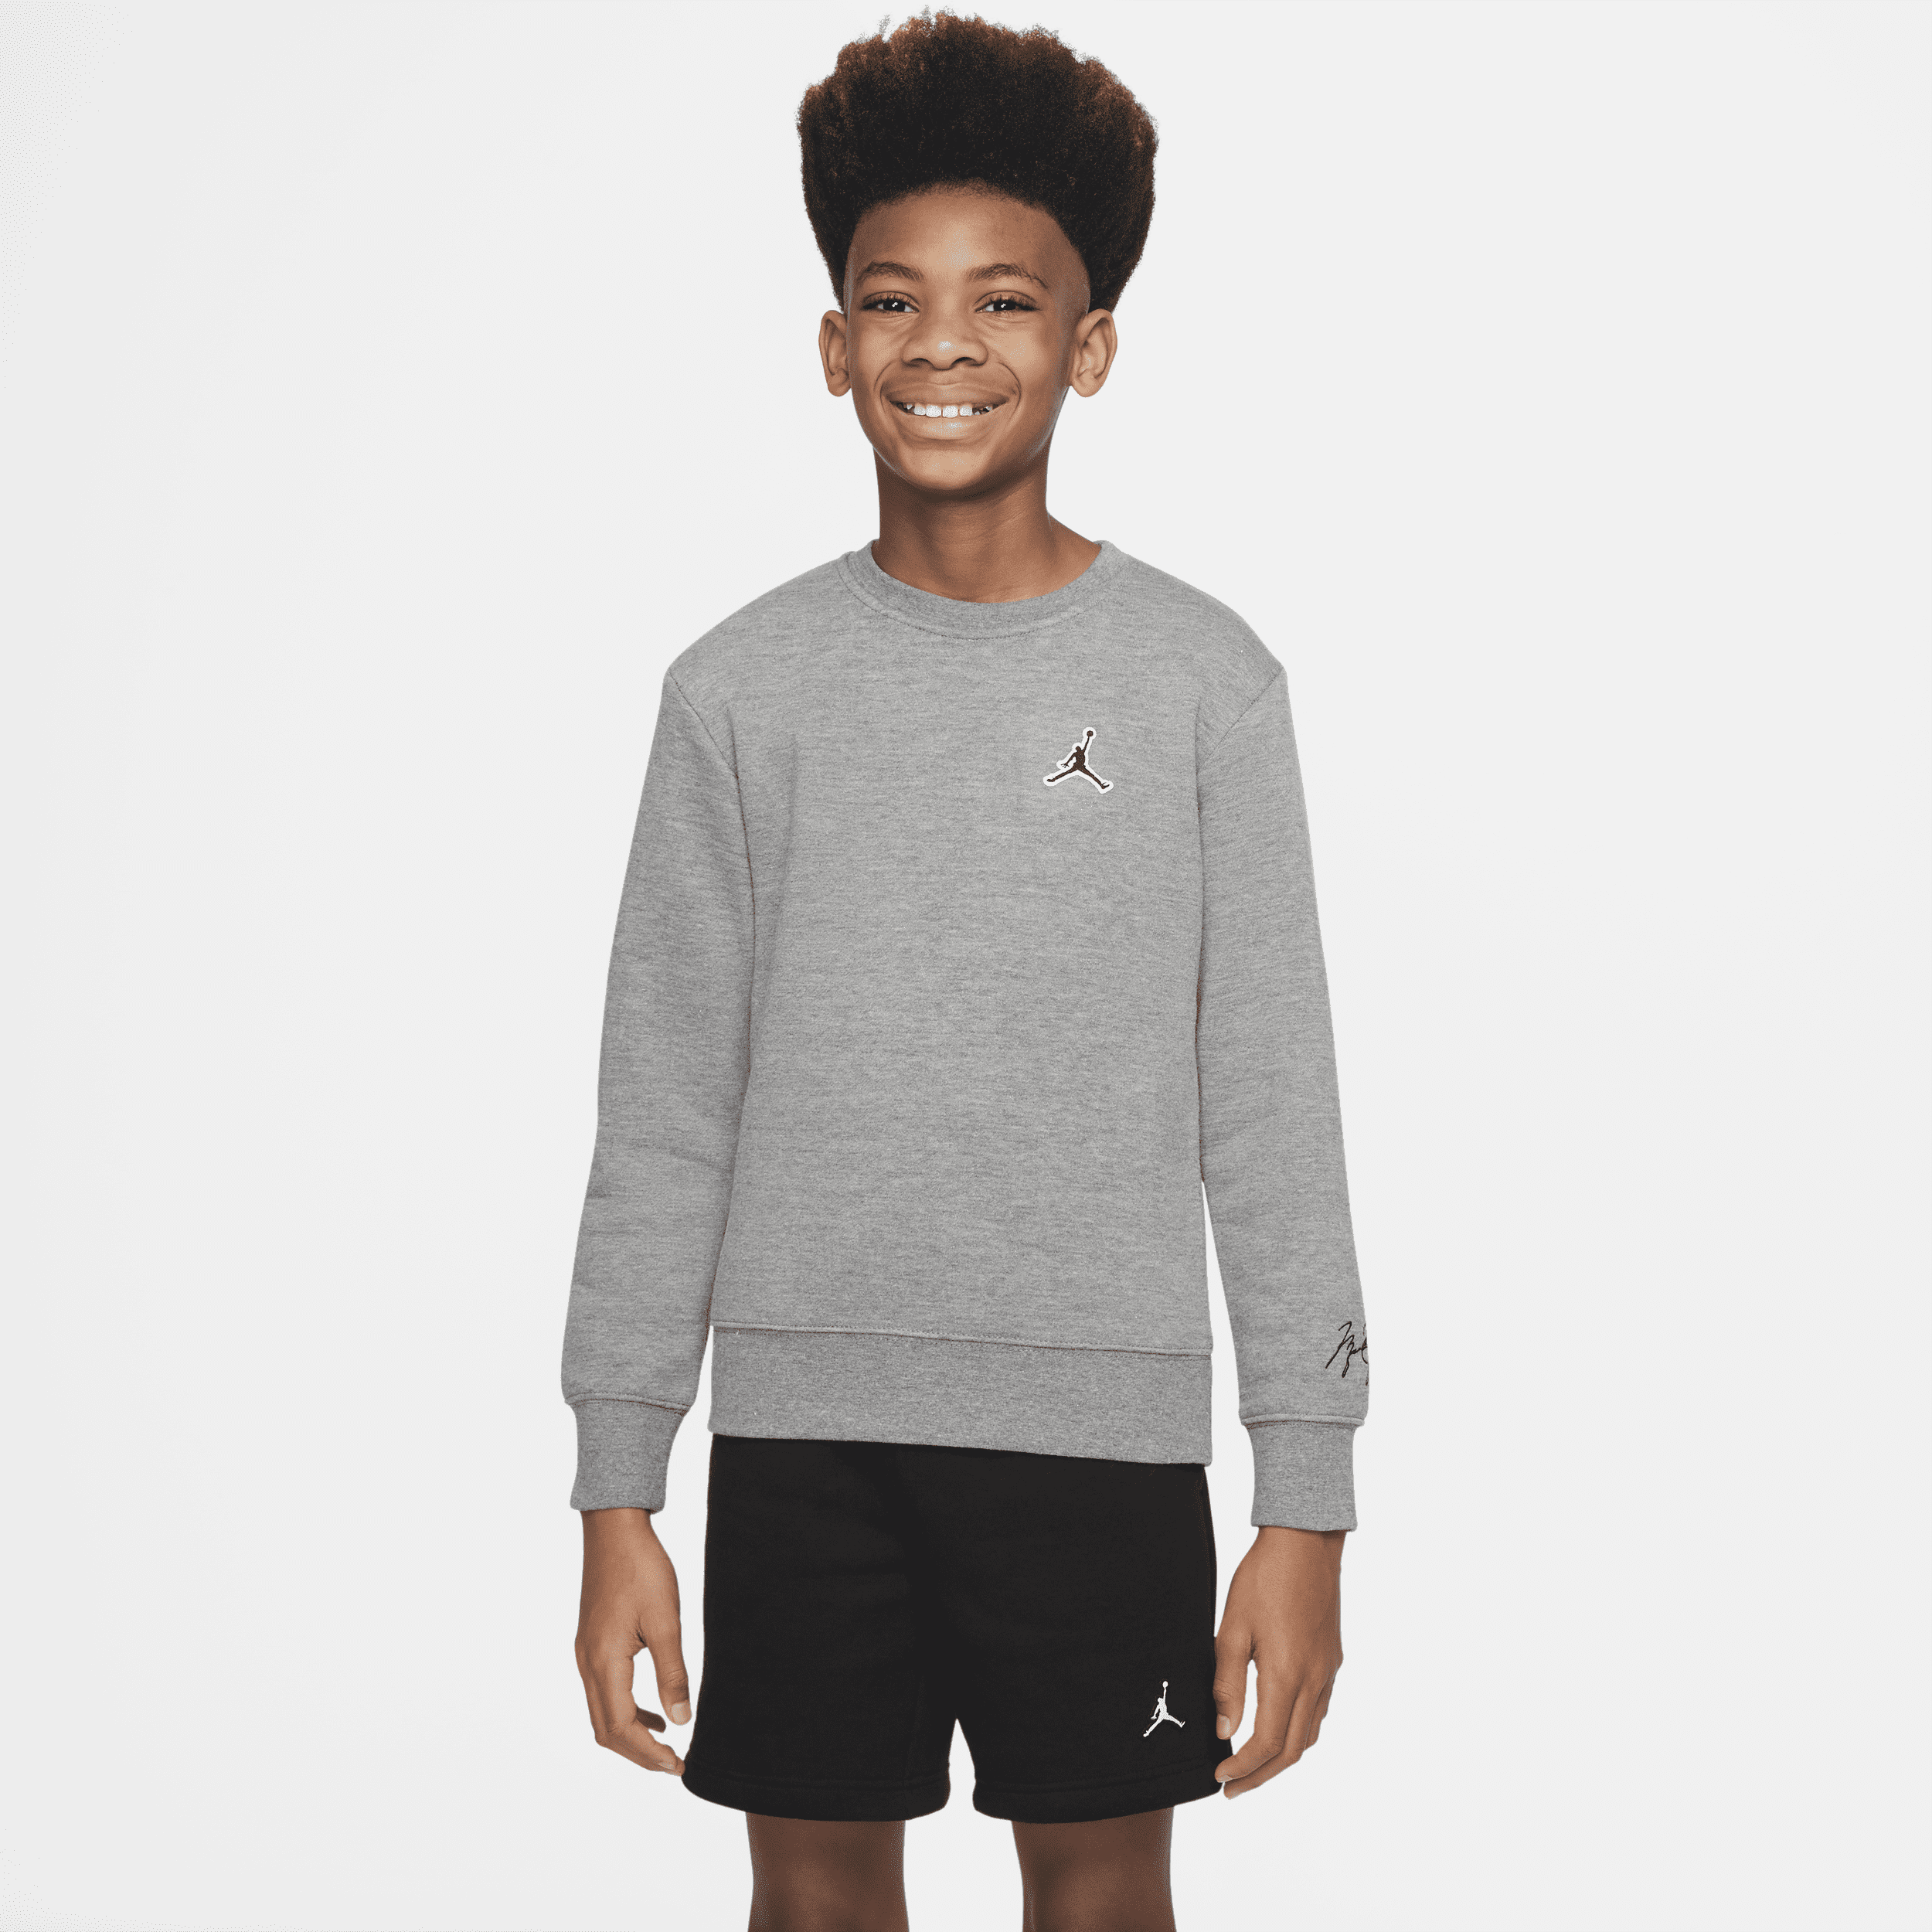 Jordan-sweatshirt til større børn (drenge) - grå